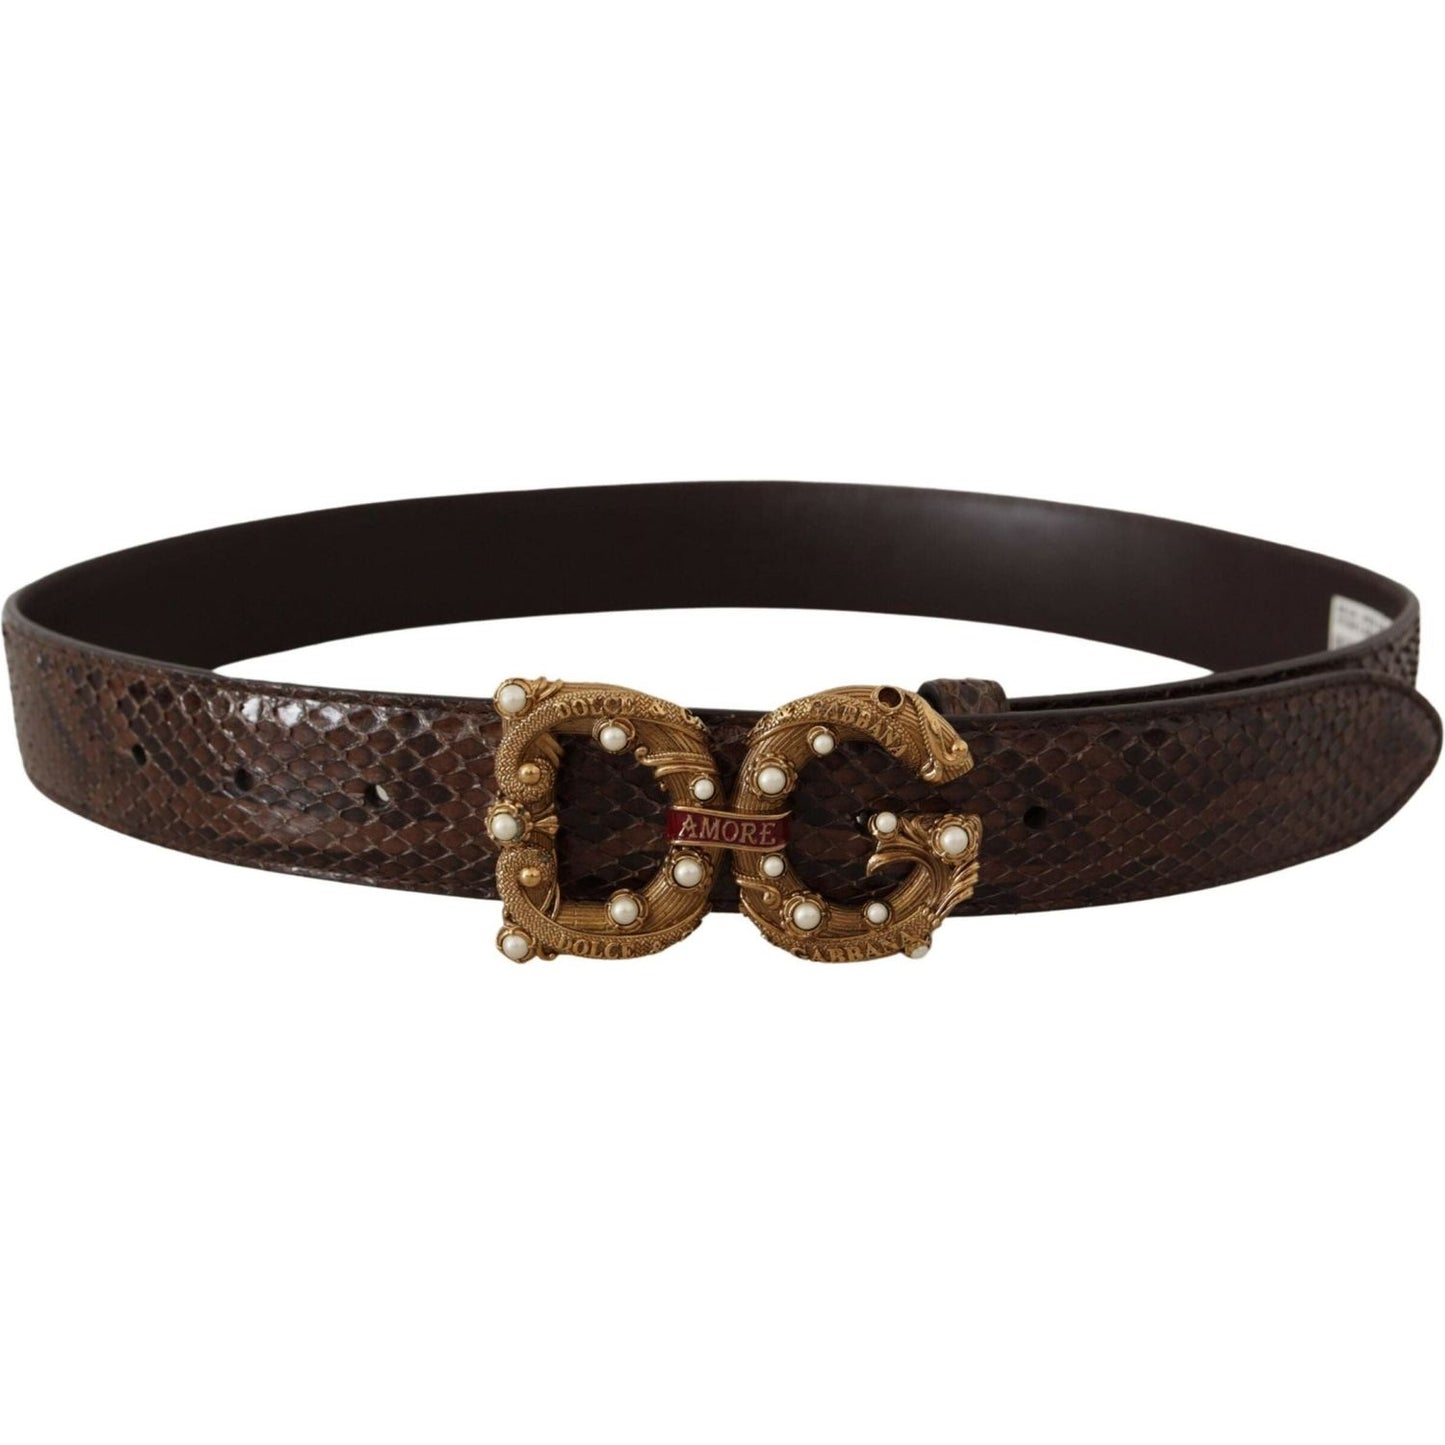 Dolce & Gabbana Elegant Snakeskin Leather Belt brown-amore-animal-print-exotic-leather-logo-buckle-belt IMG_8824-scaled-aa75c0a2-c90.jpg